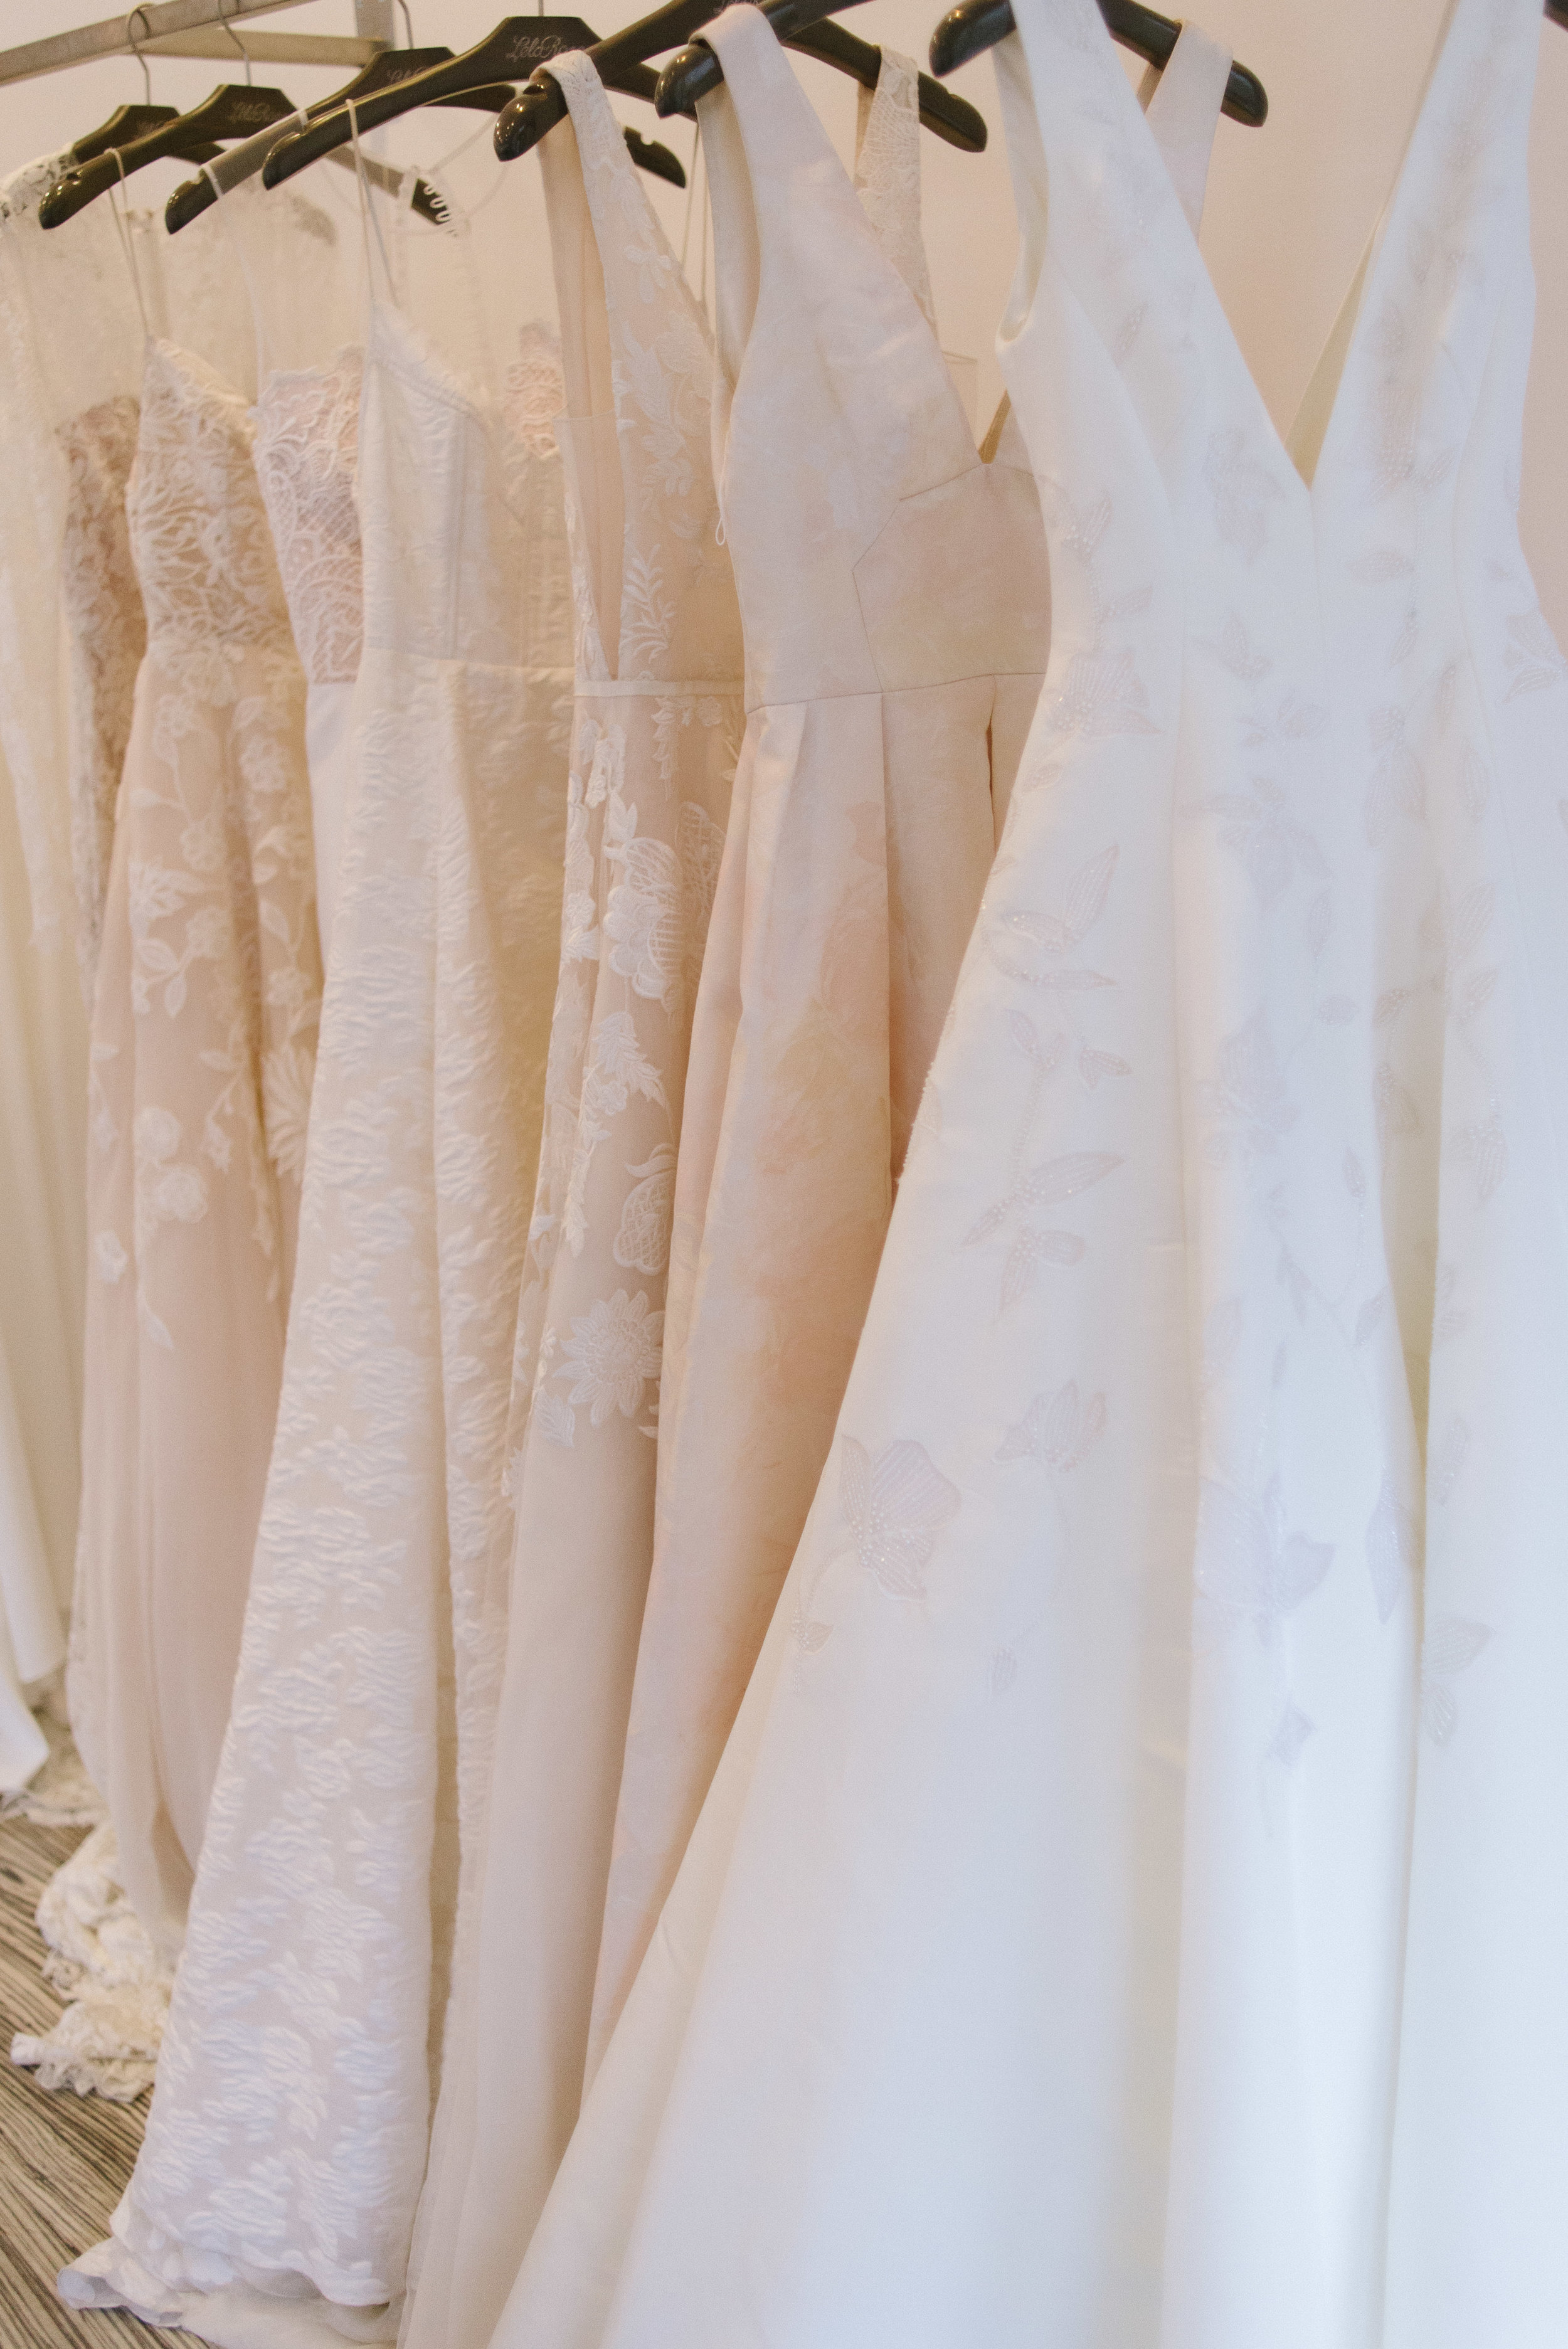  New York Bridal Fashion Week 2016 | Lela Rose Fall 2017 collection | Little White Dress Bridal Shop in Denver 